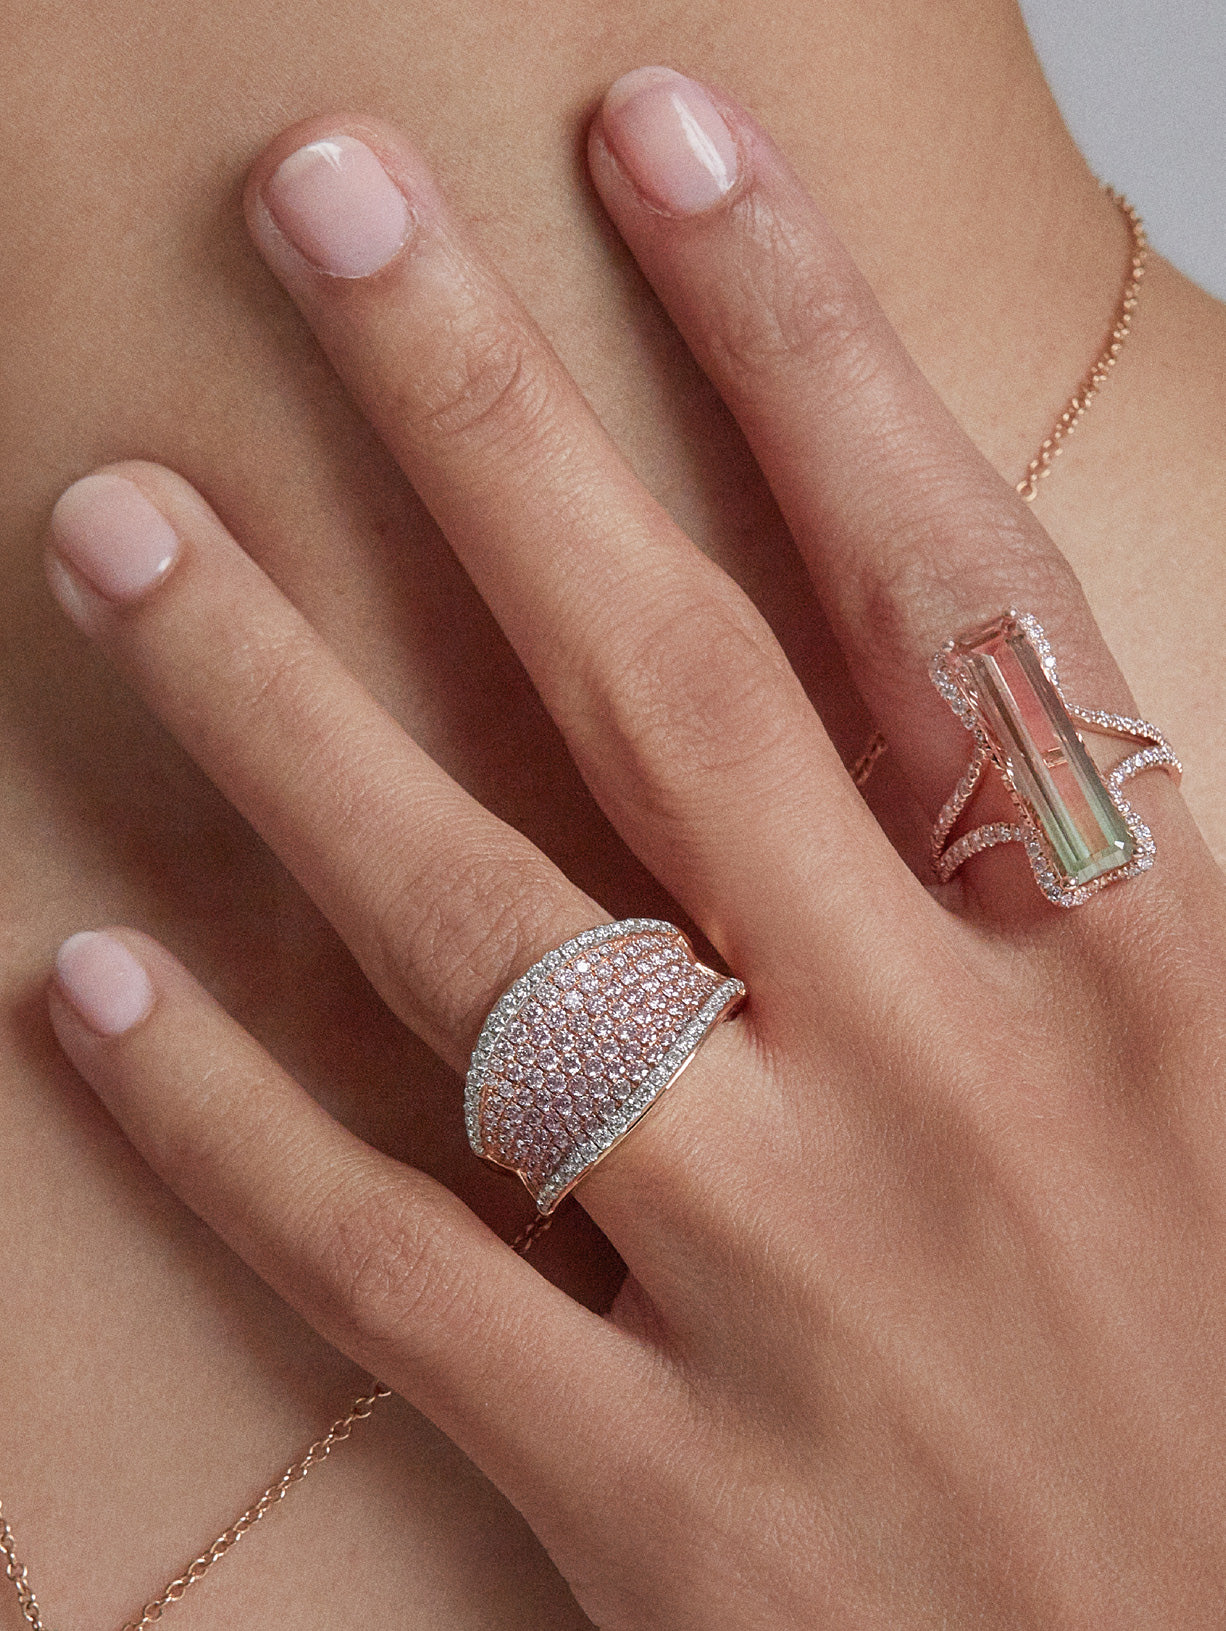 Argyle Pink™ Diamond Saddle Ring - Pink Diamonds, J FINE - J Fine, ring - Pink Diamond Jewelry, argyle-small-saddle-ring-by-j-f-i-n-e - Argyle Pink Diamonds